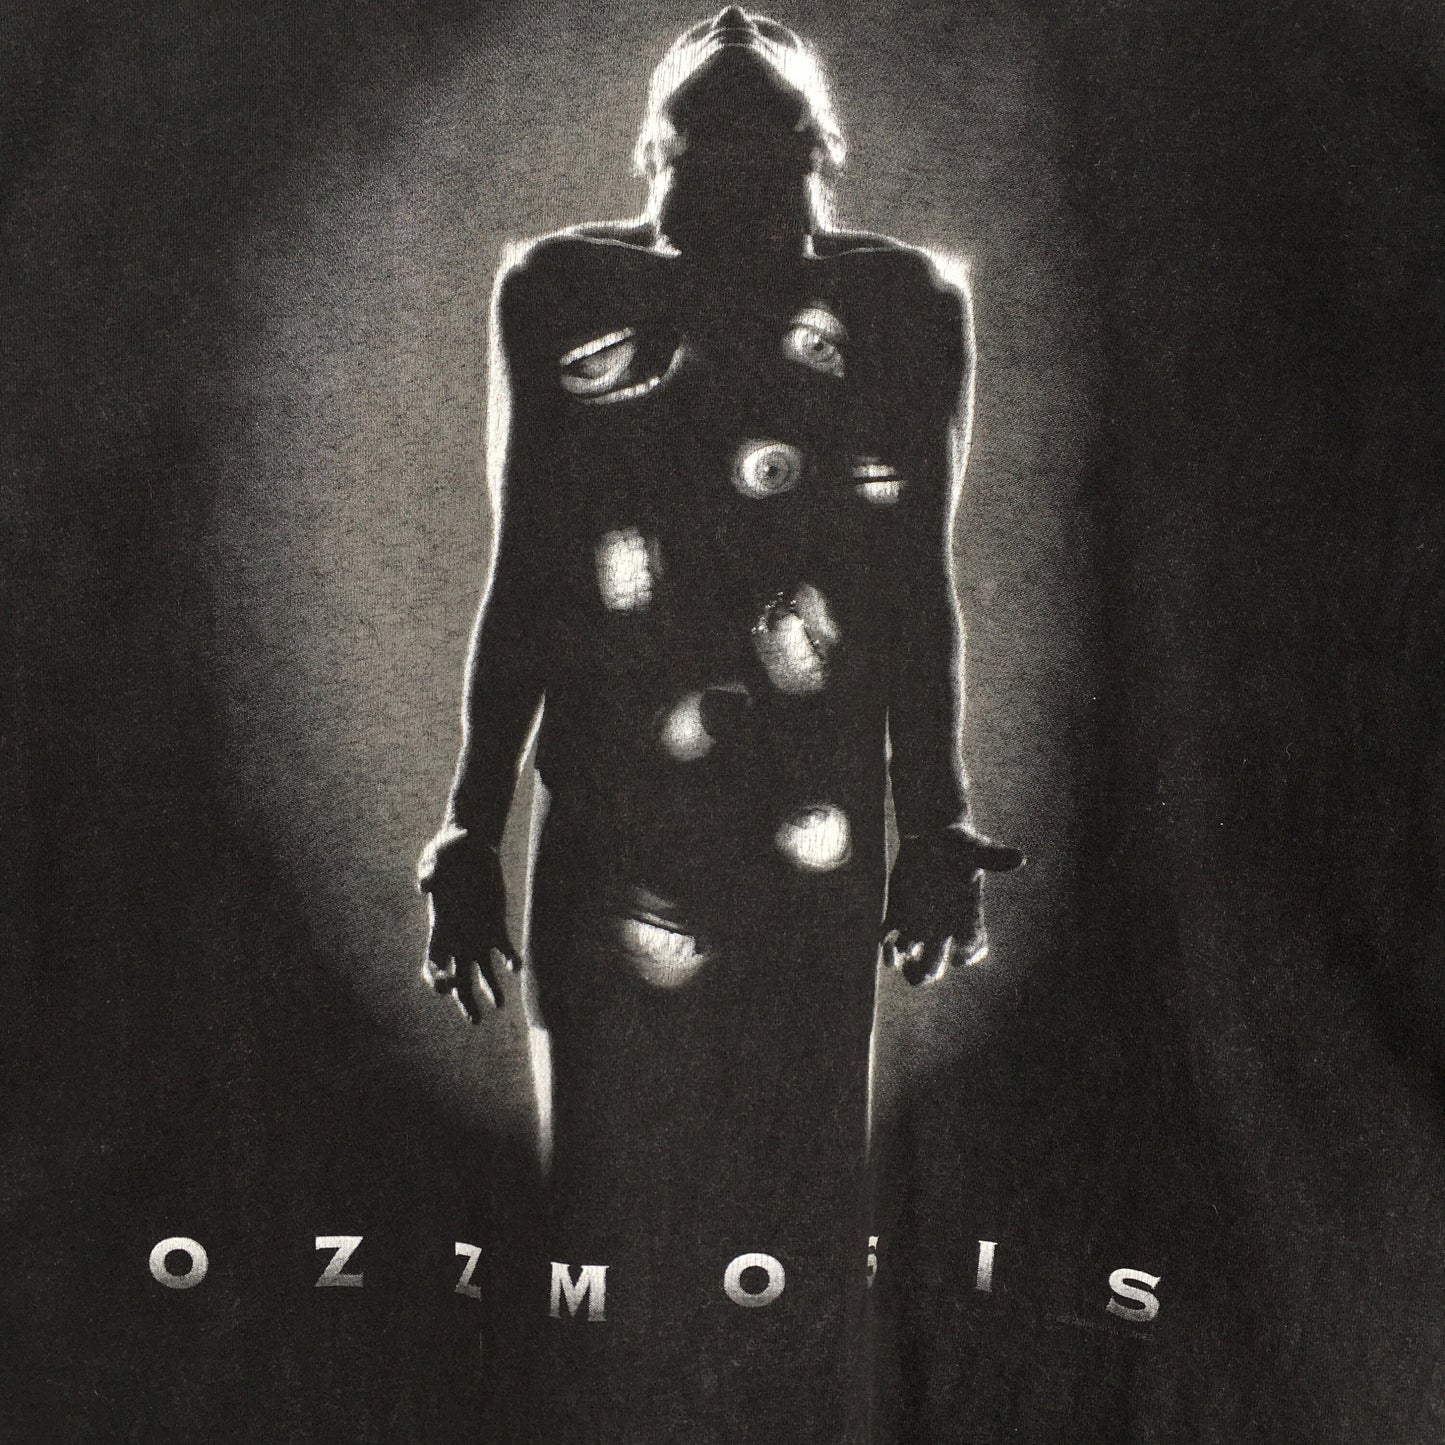 Ozzy Osbourne Metal Black T shirt Medium